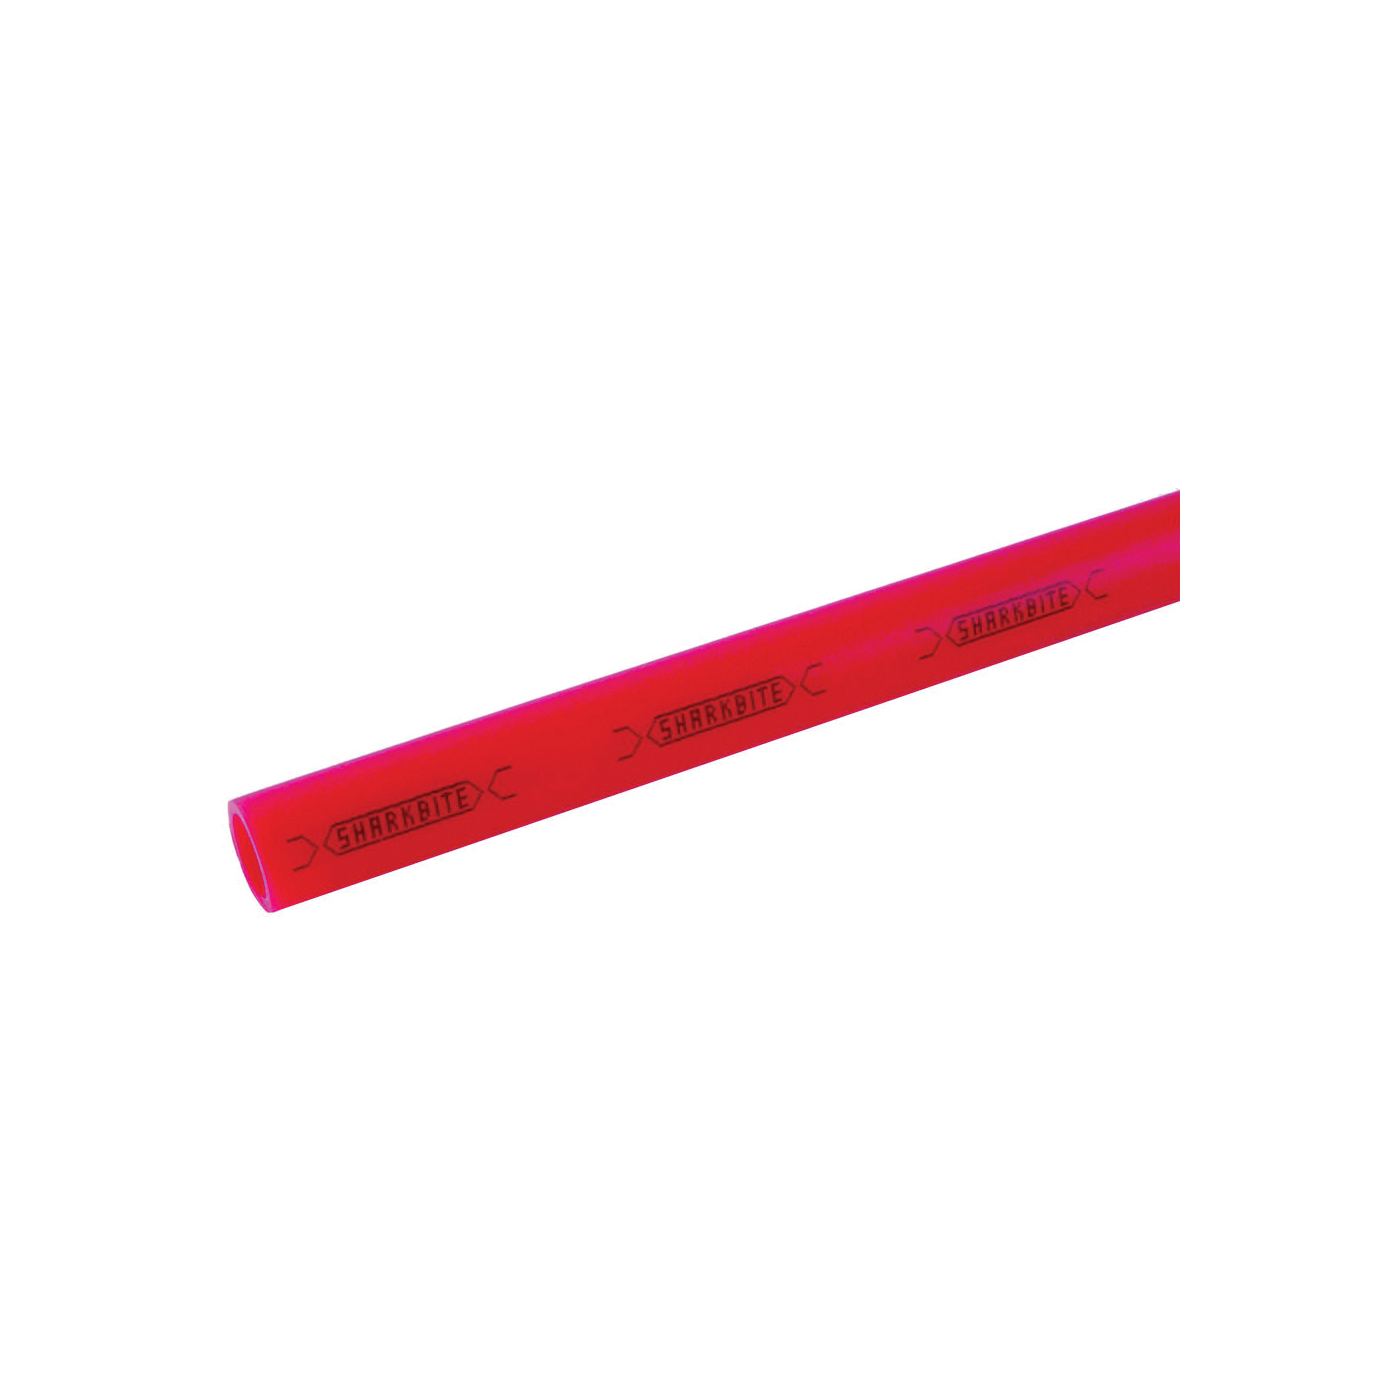 APPR3410 PEX-B Pipe Tubing, 3/4 in, Red, 10 ft L